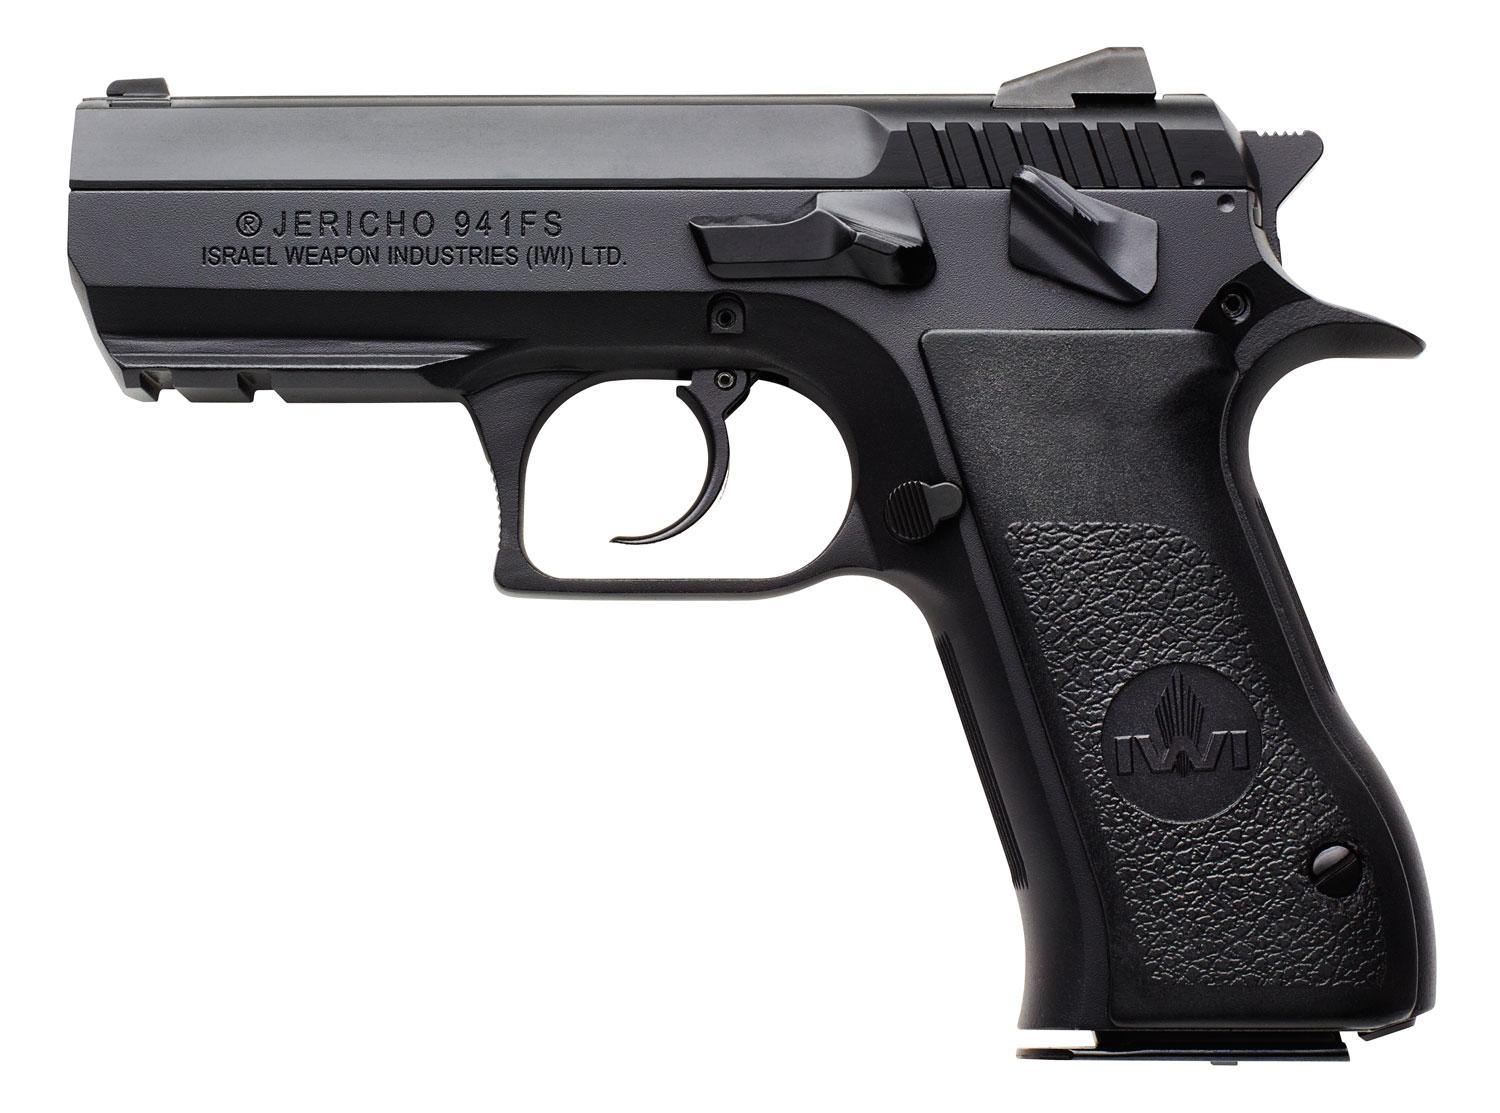 IWI Jericho 941 FS9 SA/DA Pistol J941FS910, 9mm Luger, 3.80", Polymer Grips, Black Finish, 10 Rds